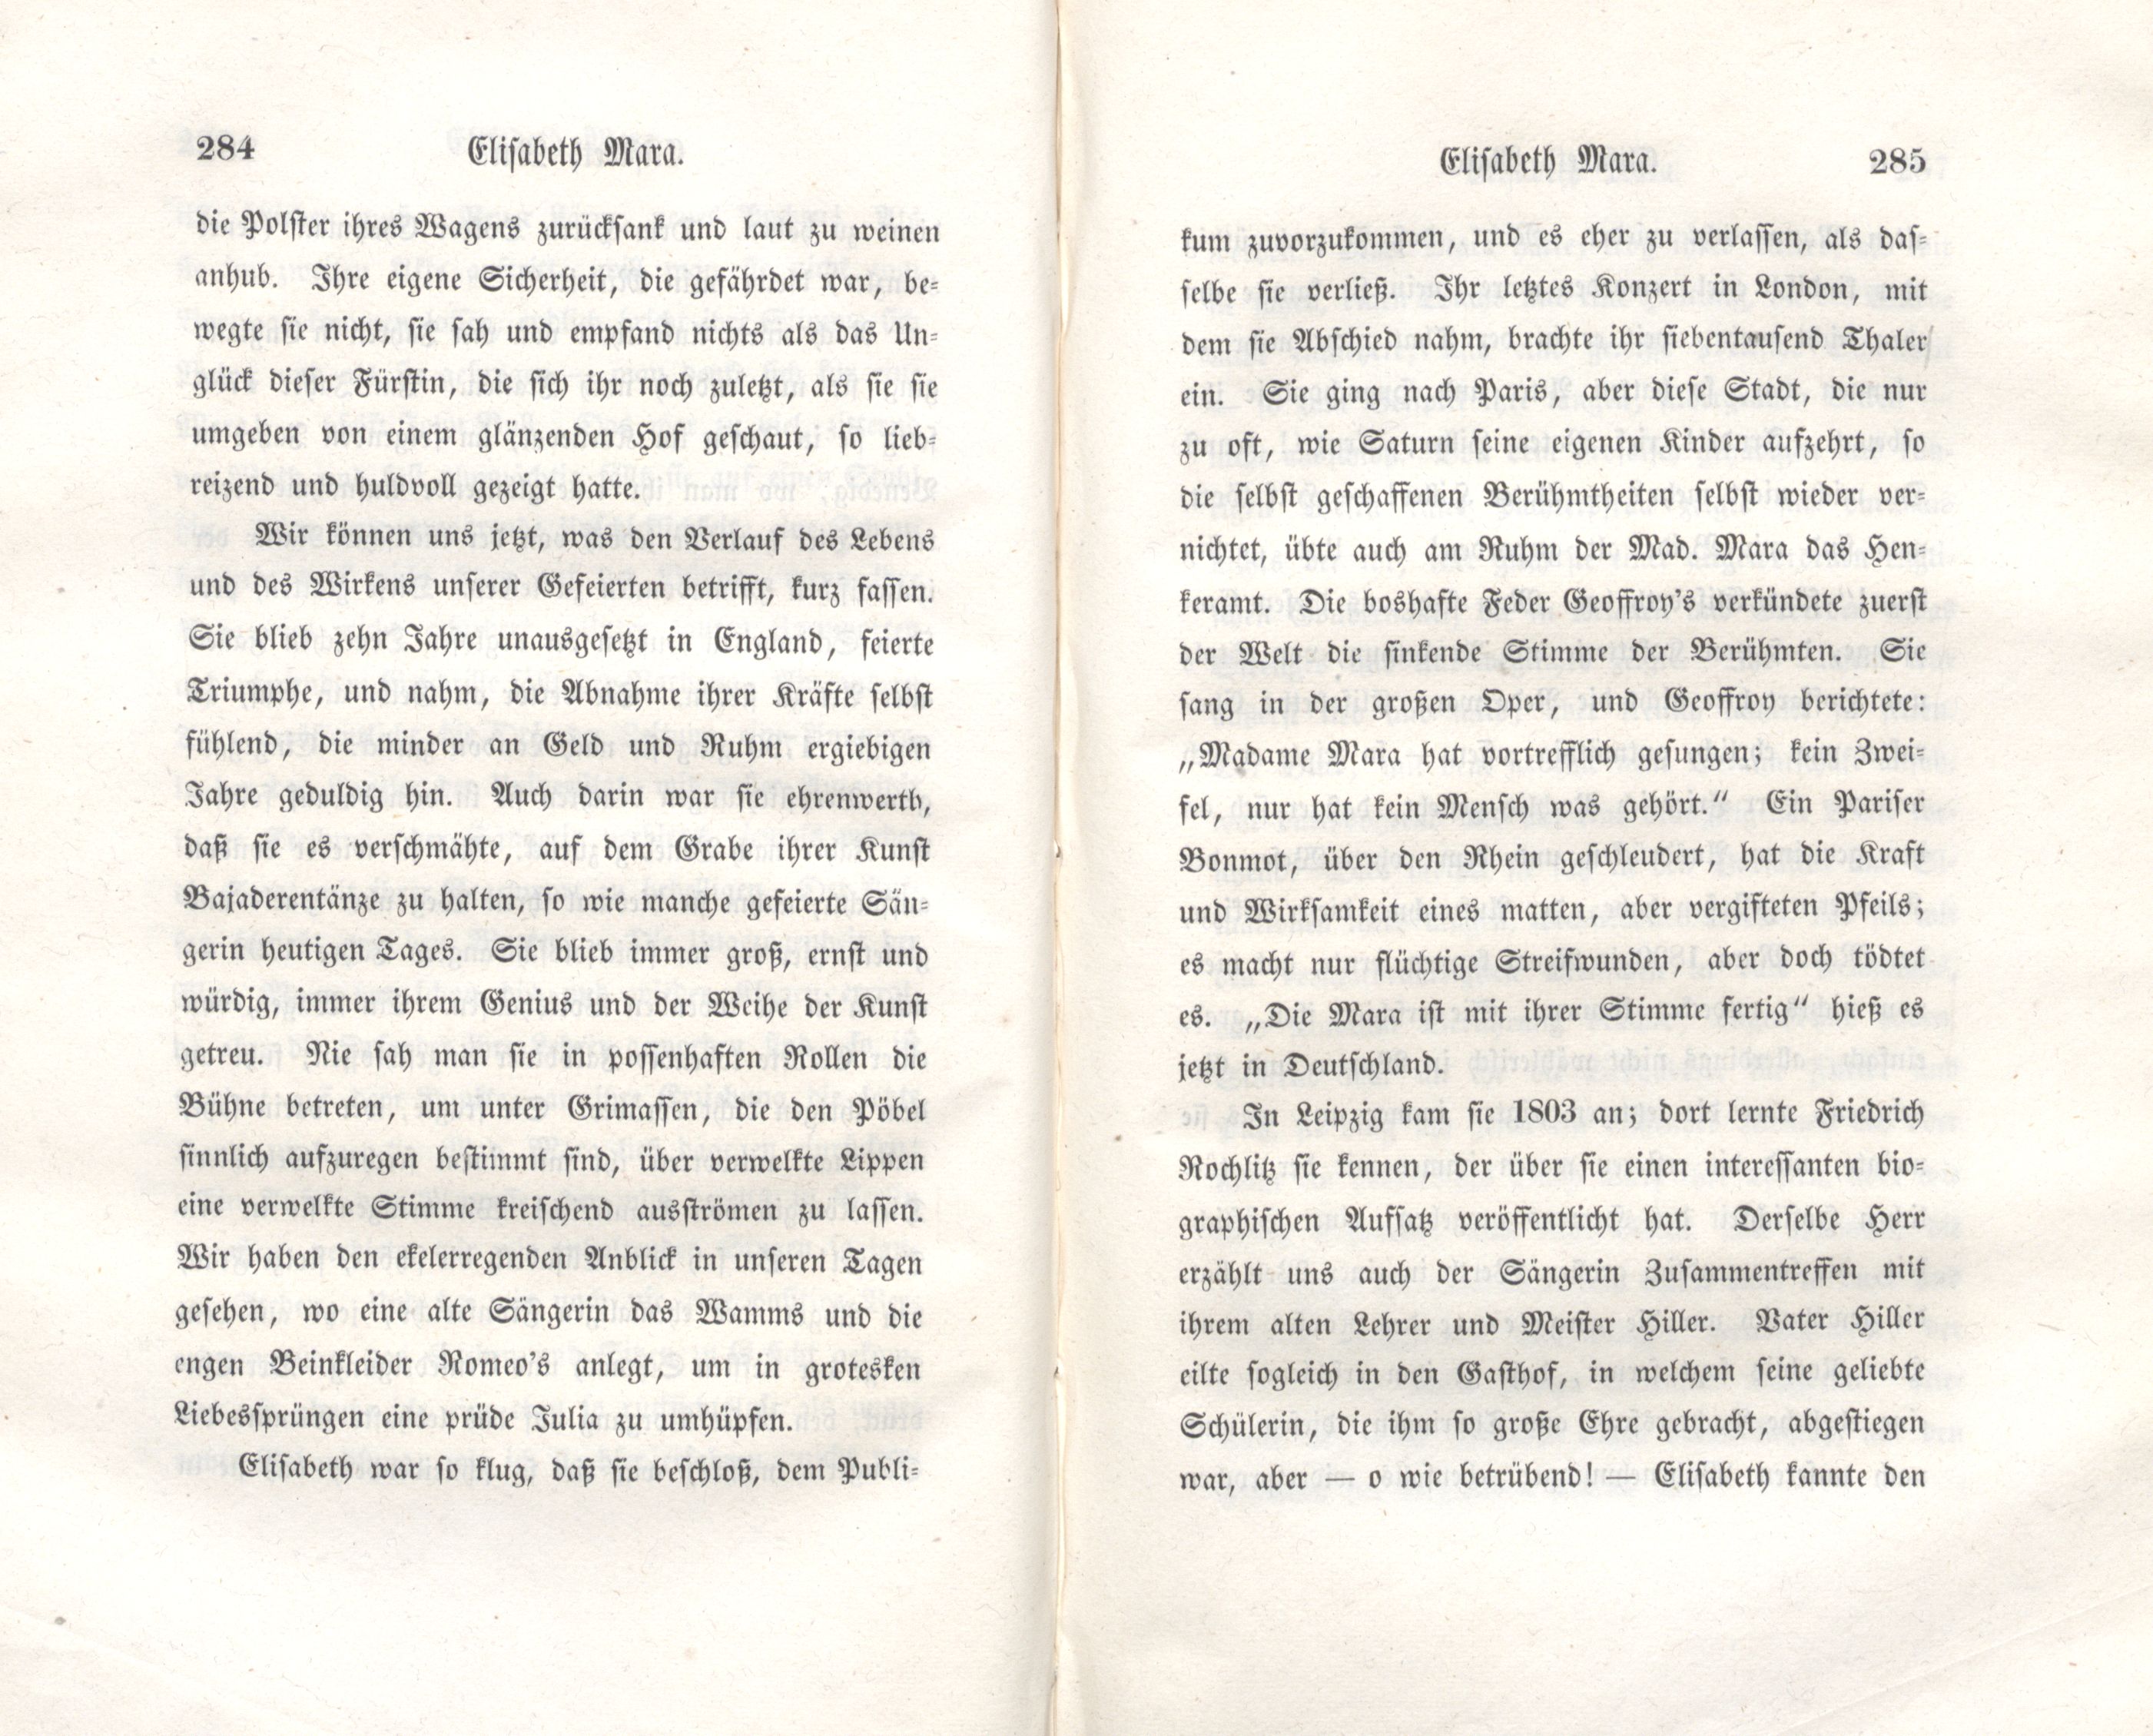 Berühmte deutsche Frauen des achtzehnten Jahrhunderts [1] (1848) | 152. (284-285) Основной текст